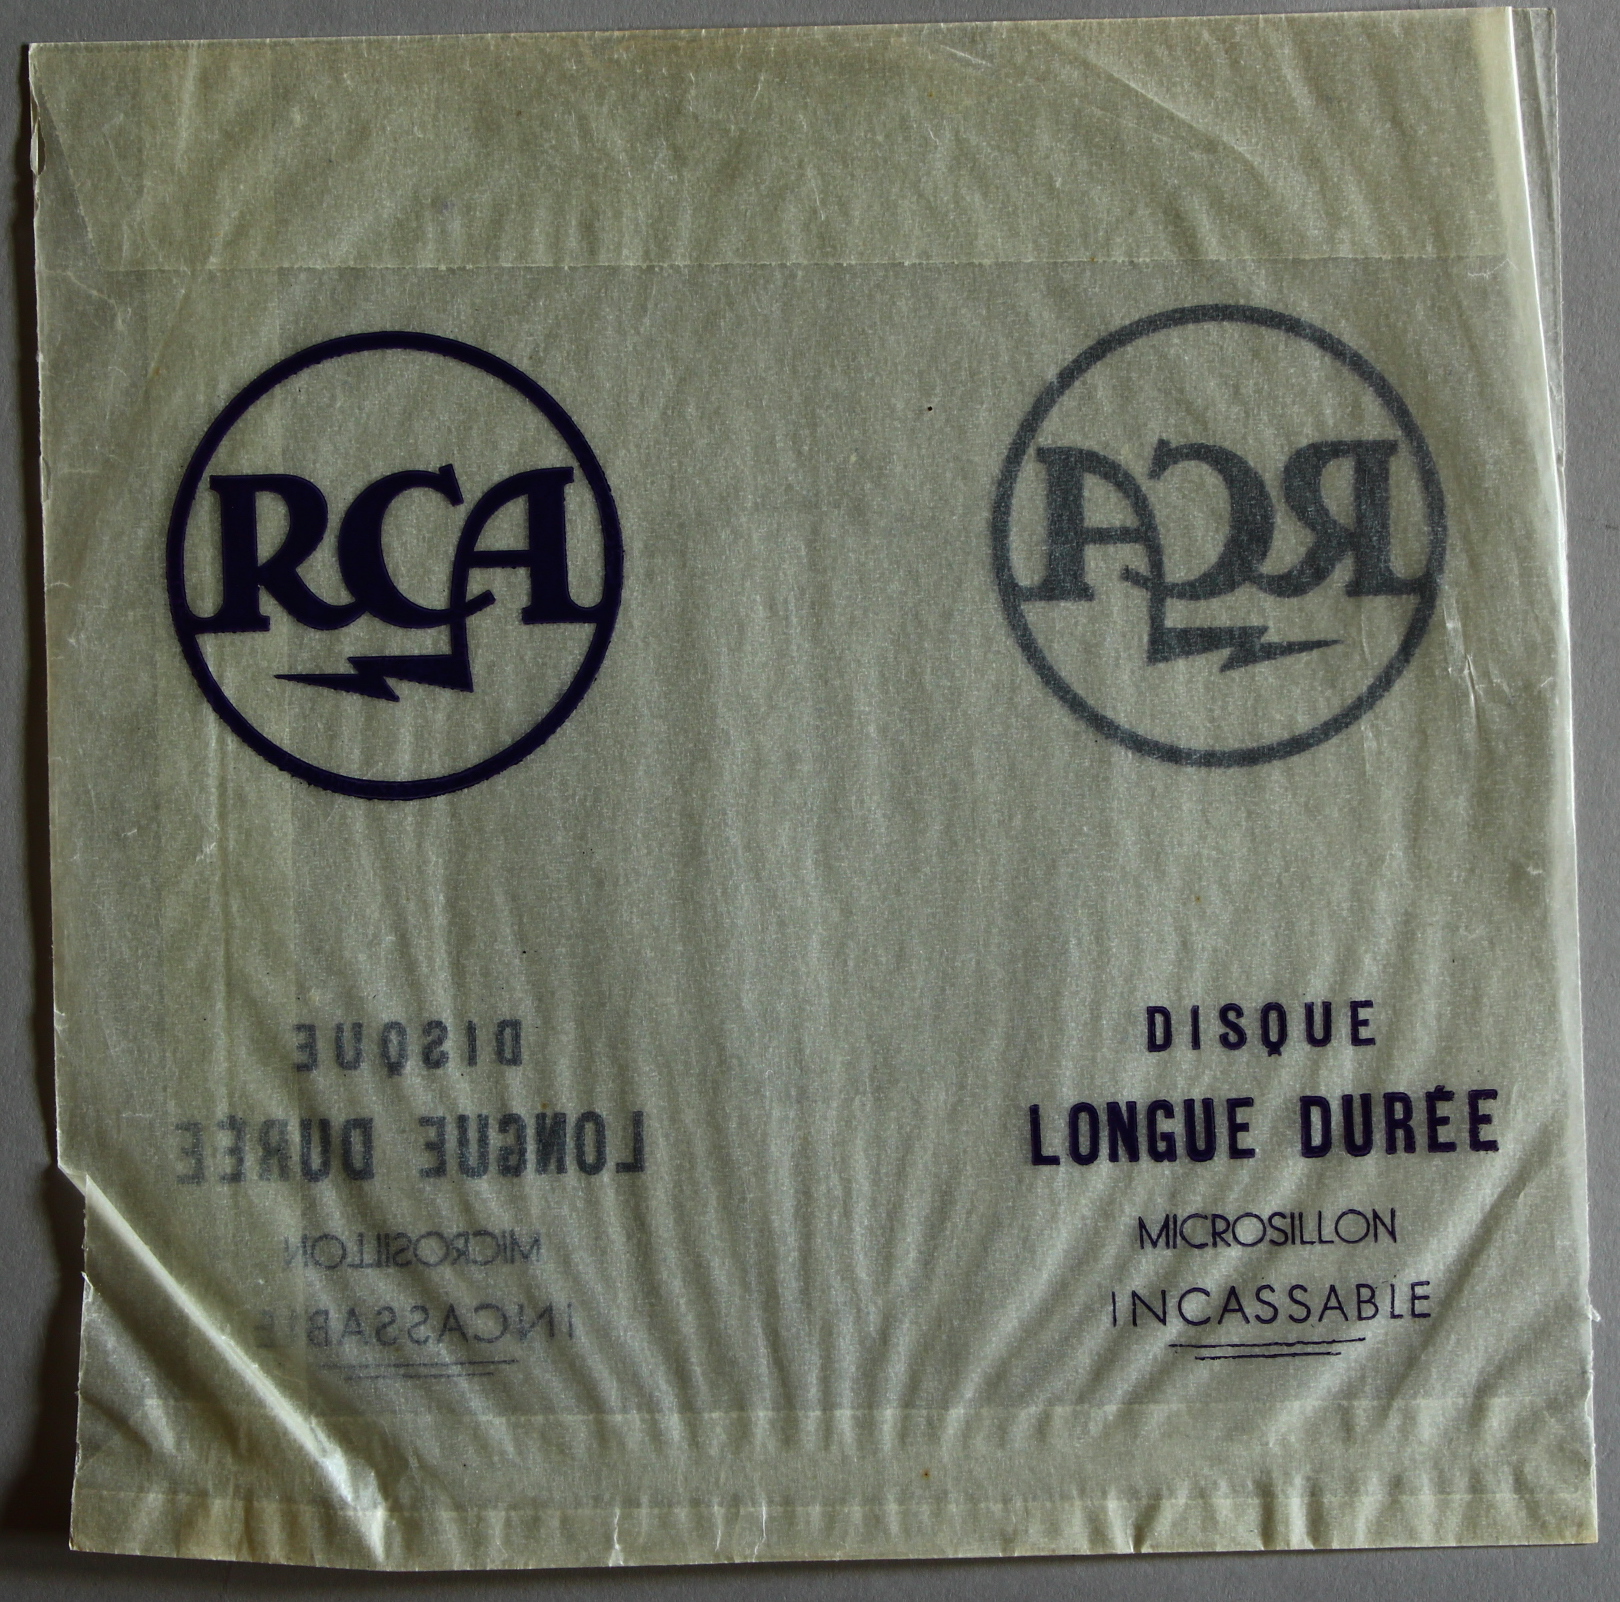 Elvis Presley Rare French 10 inch vinyl record "Good Rockin Tonight" original pressing 130.252. - Image 5 of 6